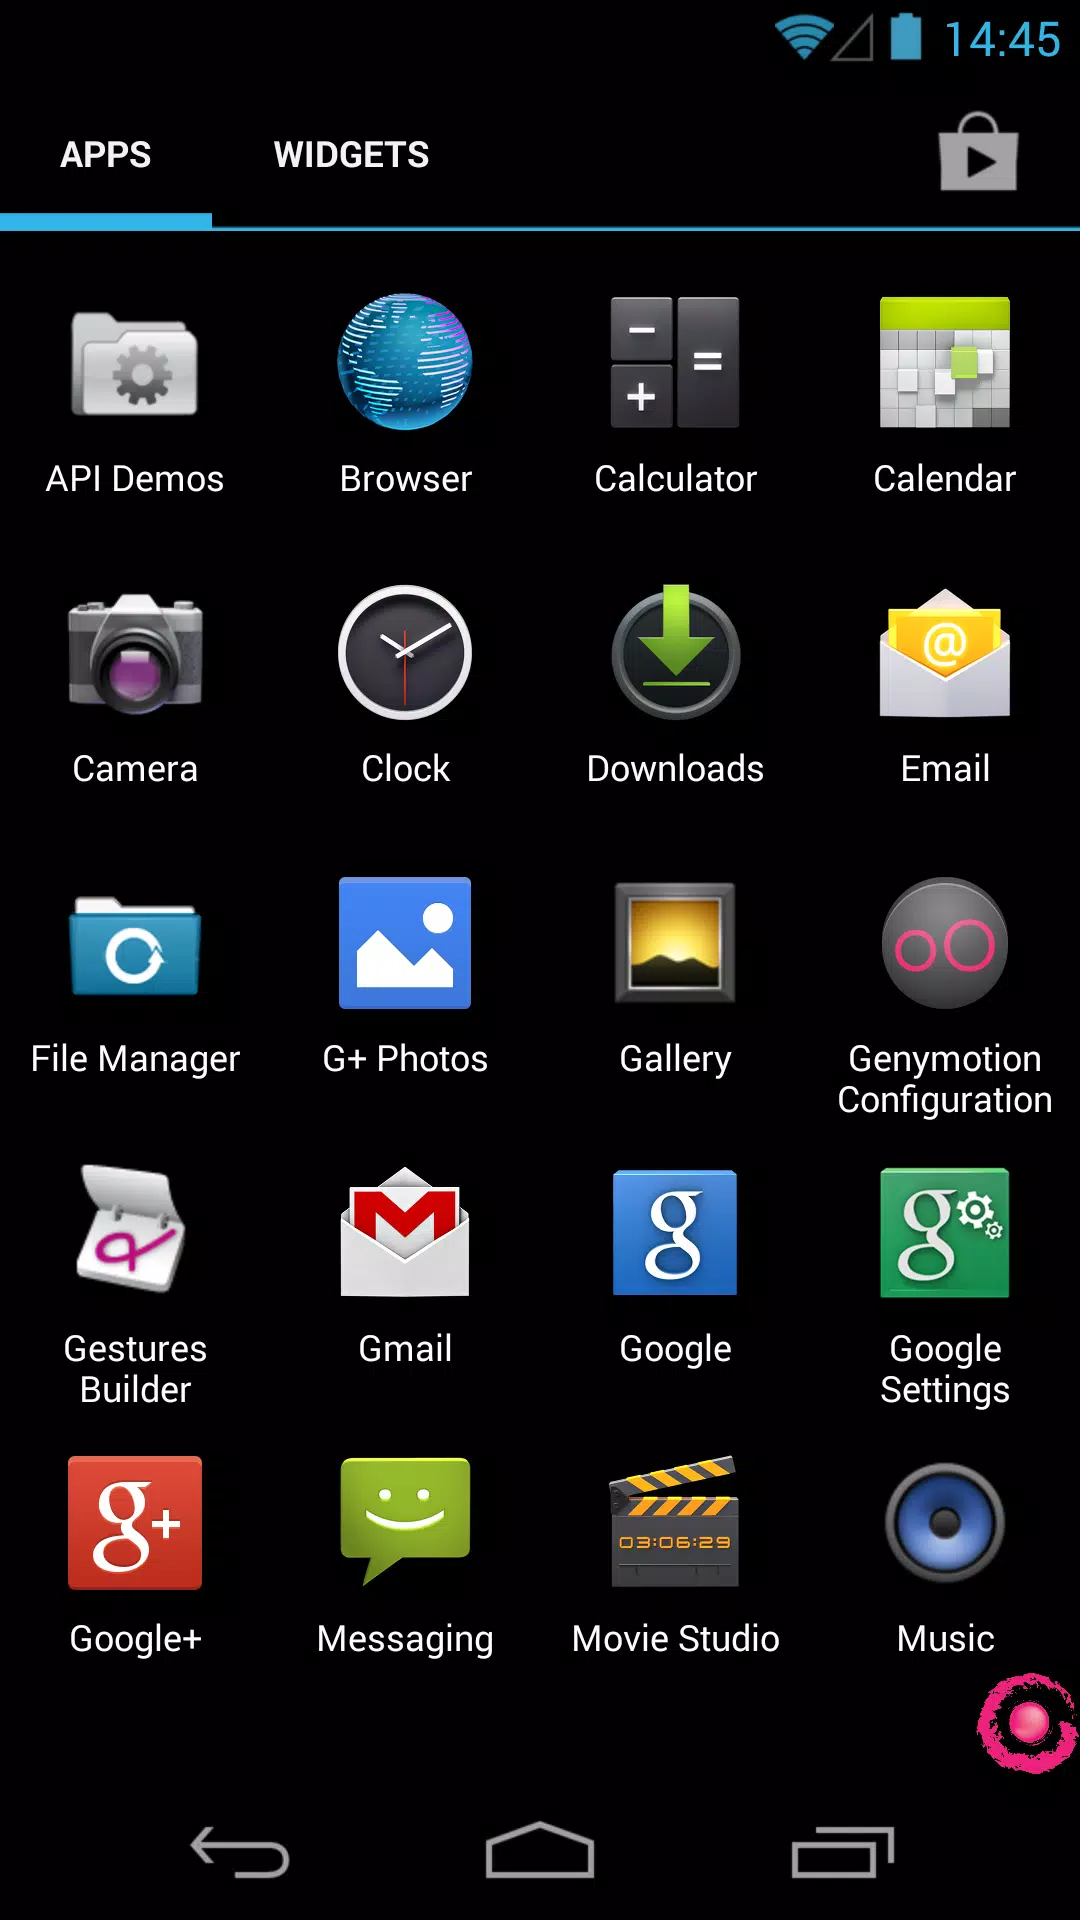 Will You Press The Button? APK (Android App) - Скачать Бесплатно